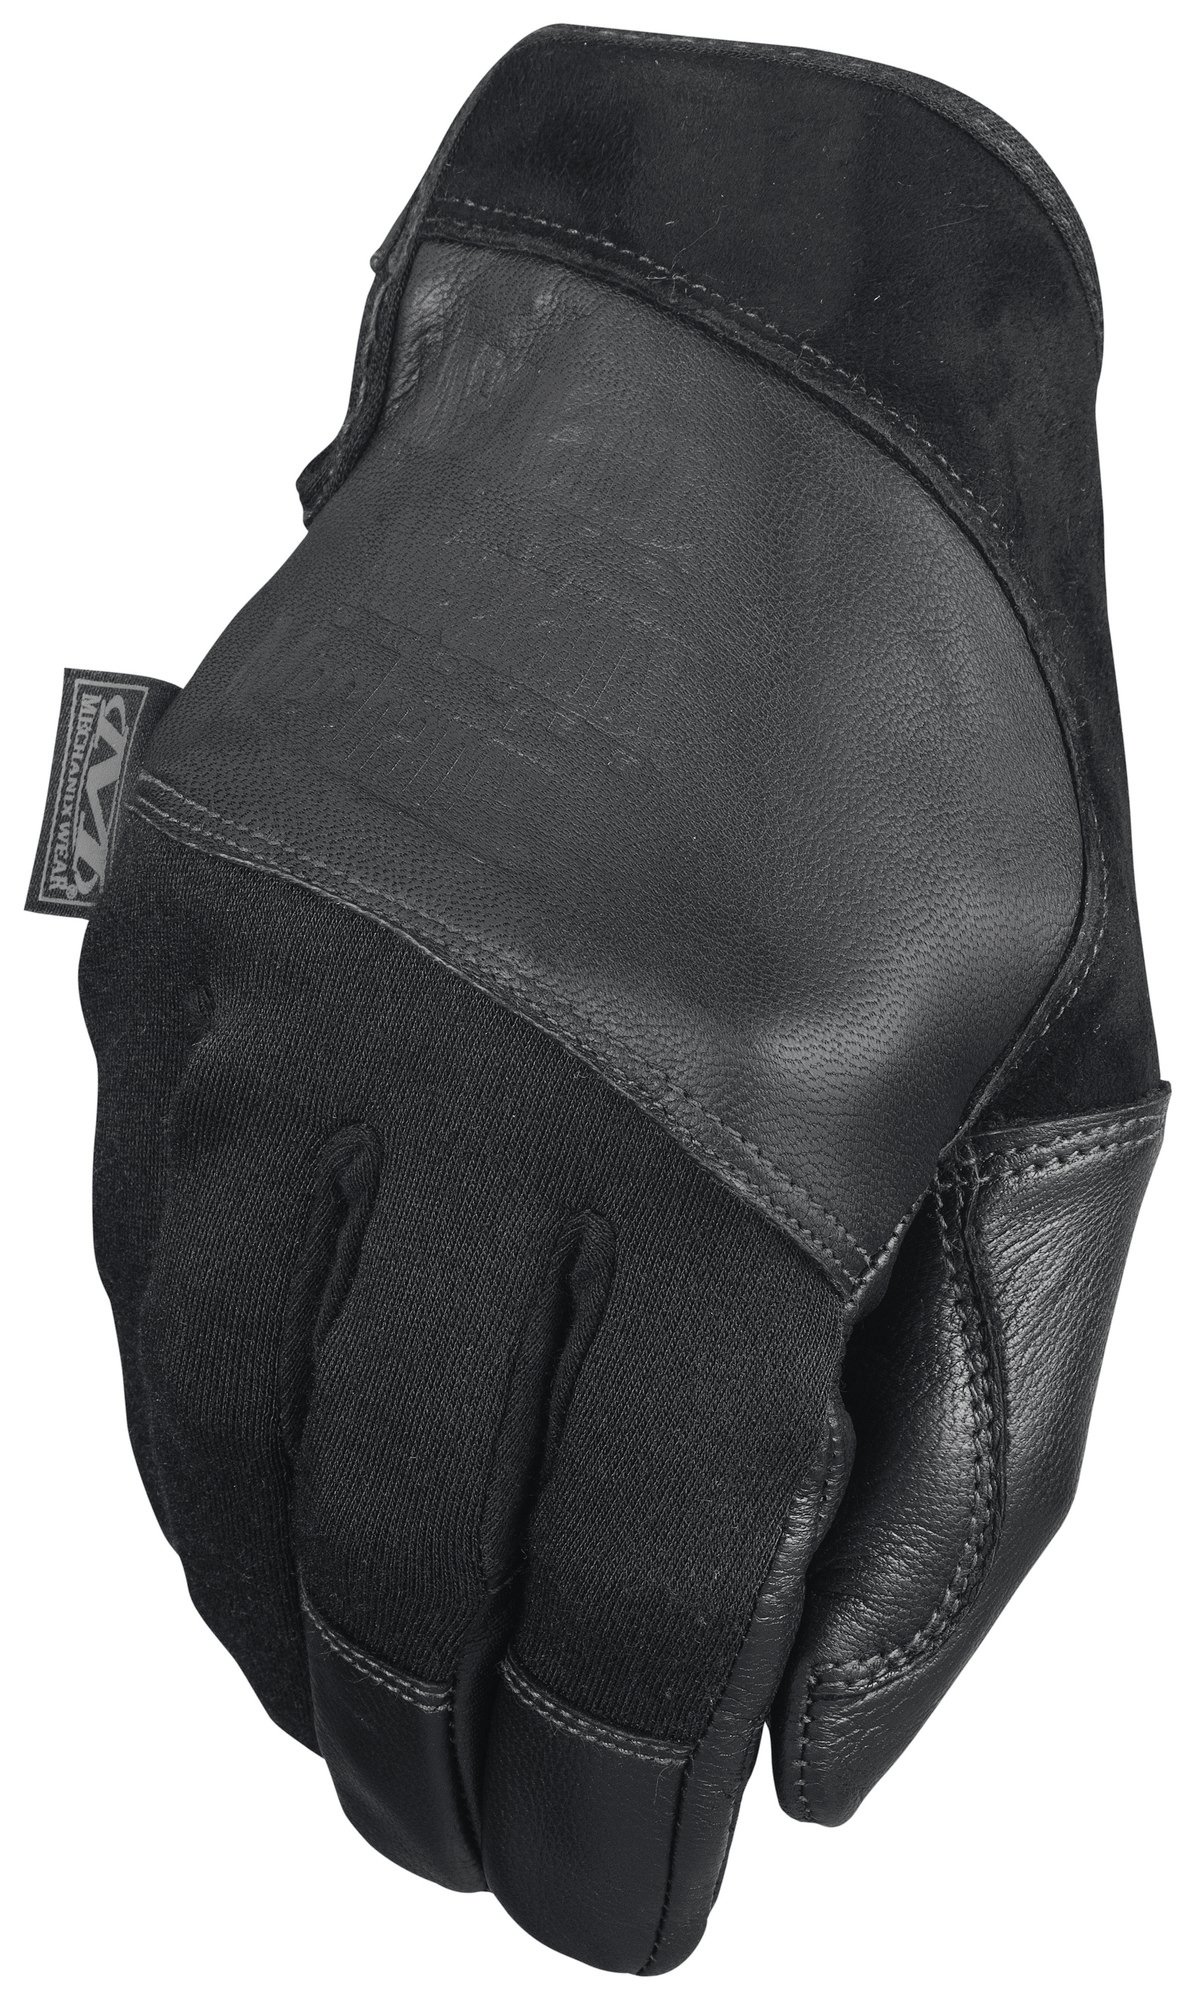 MECHANIX rukavice Tempest - Covert - čierne S/8